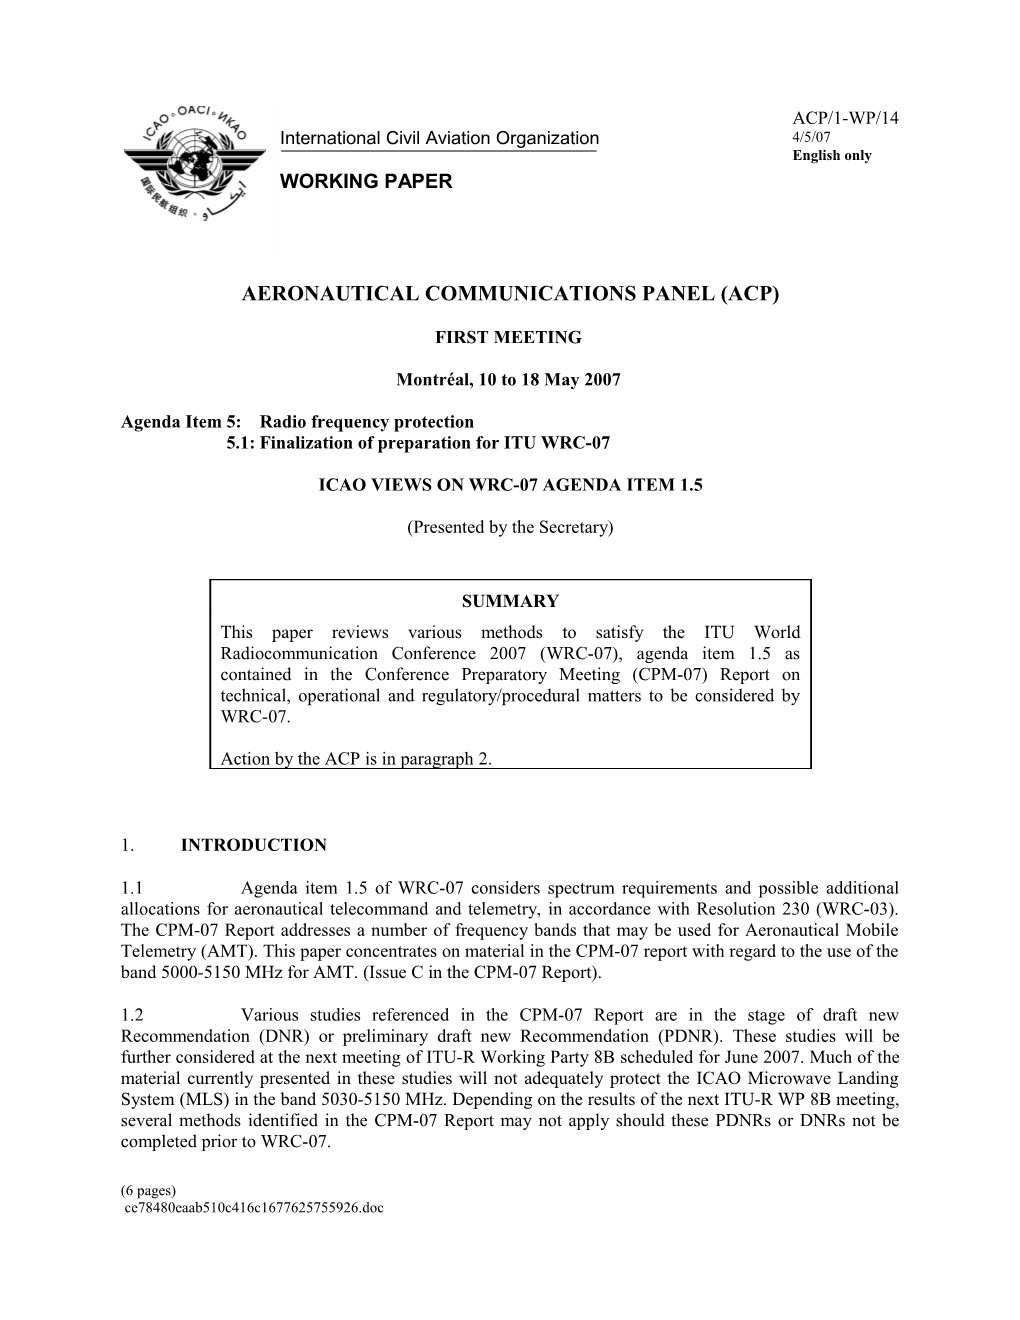 ICAO Views on WRC-07 Agenda Item 1.5